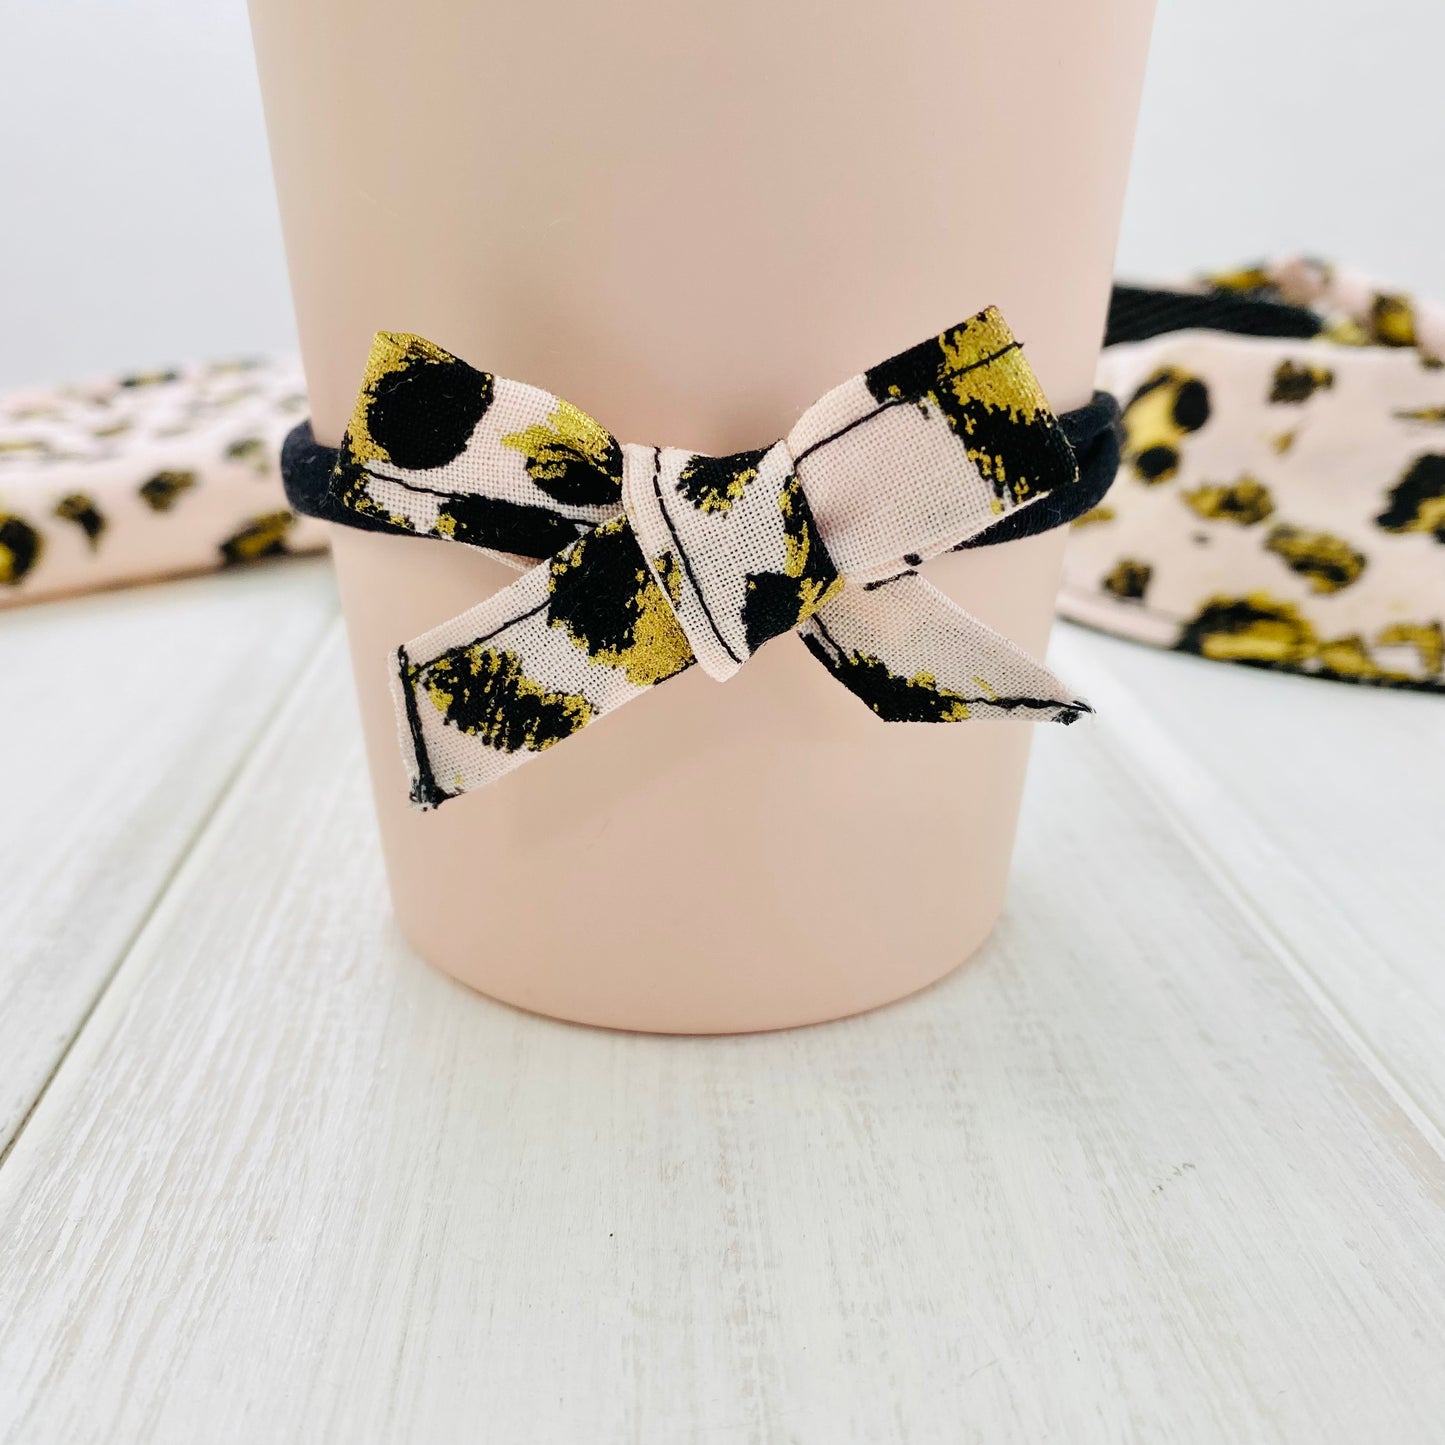 Handtied bow on stretchy headband, blush pink cheetah print fabric on black headband.